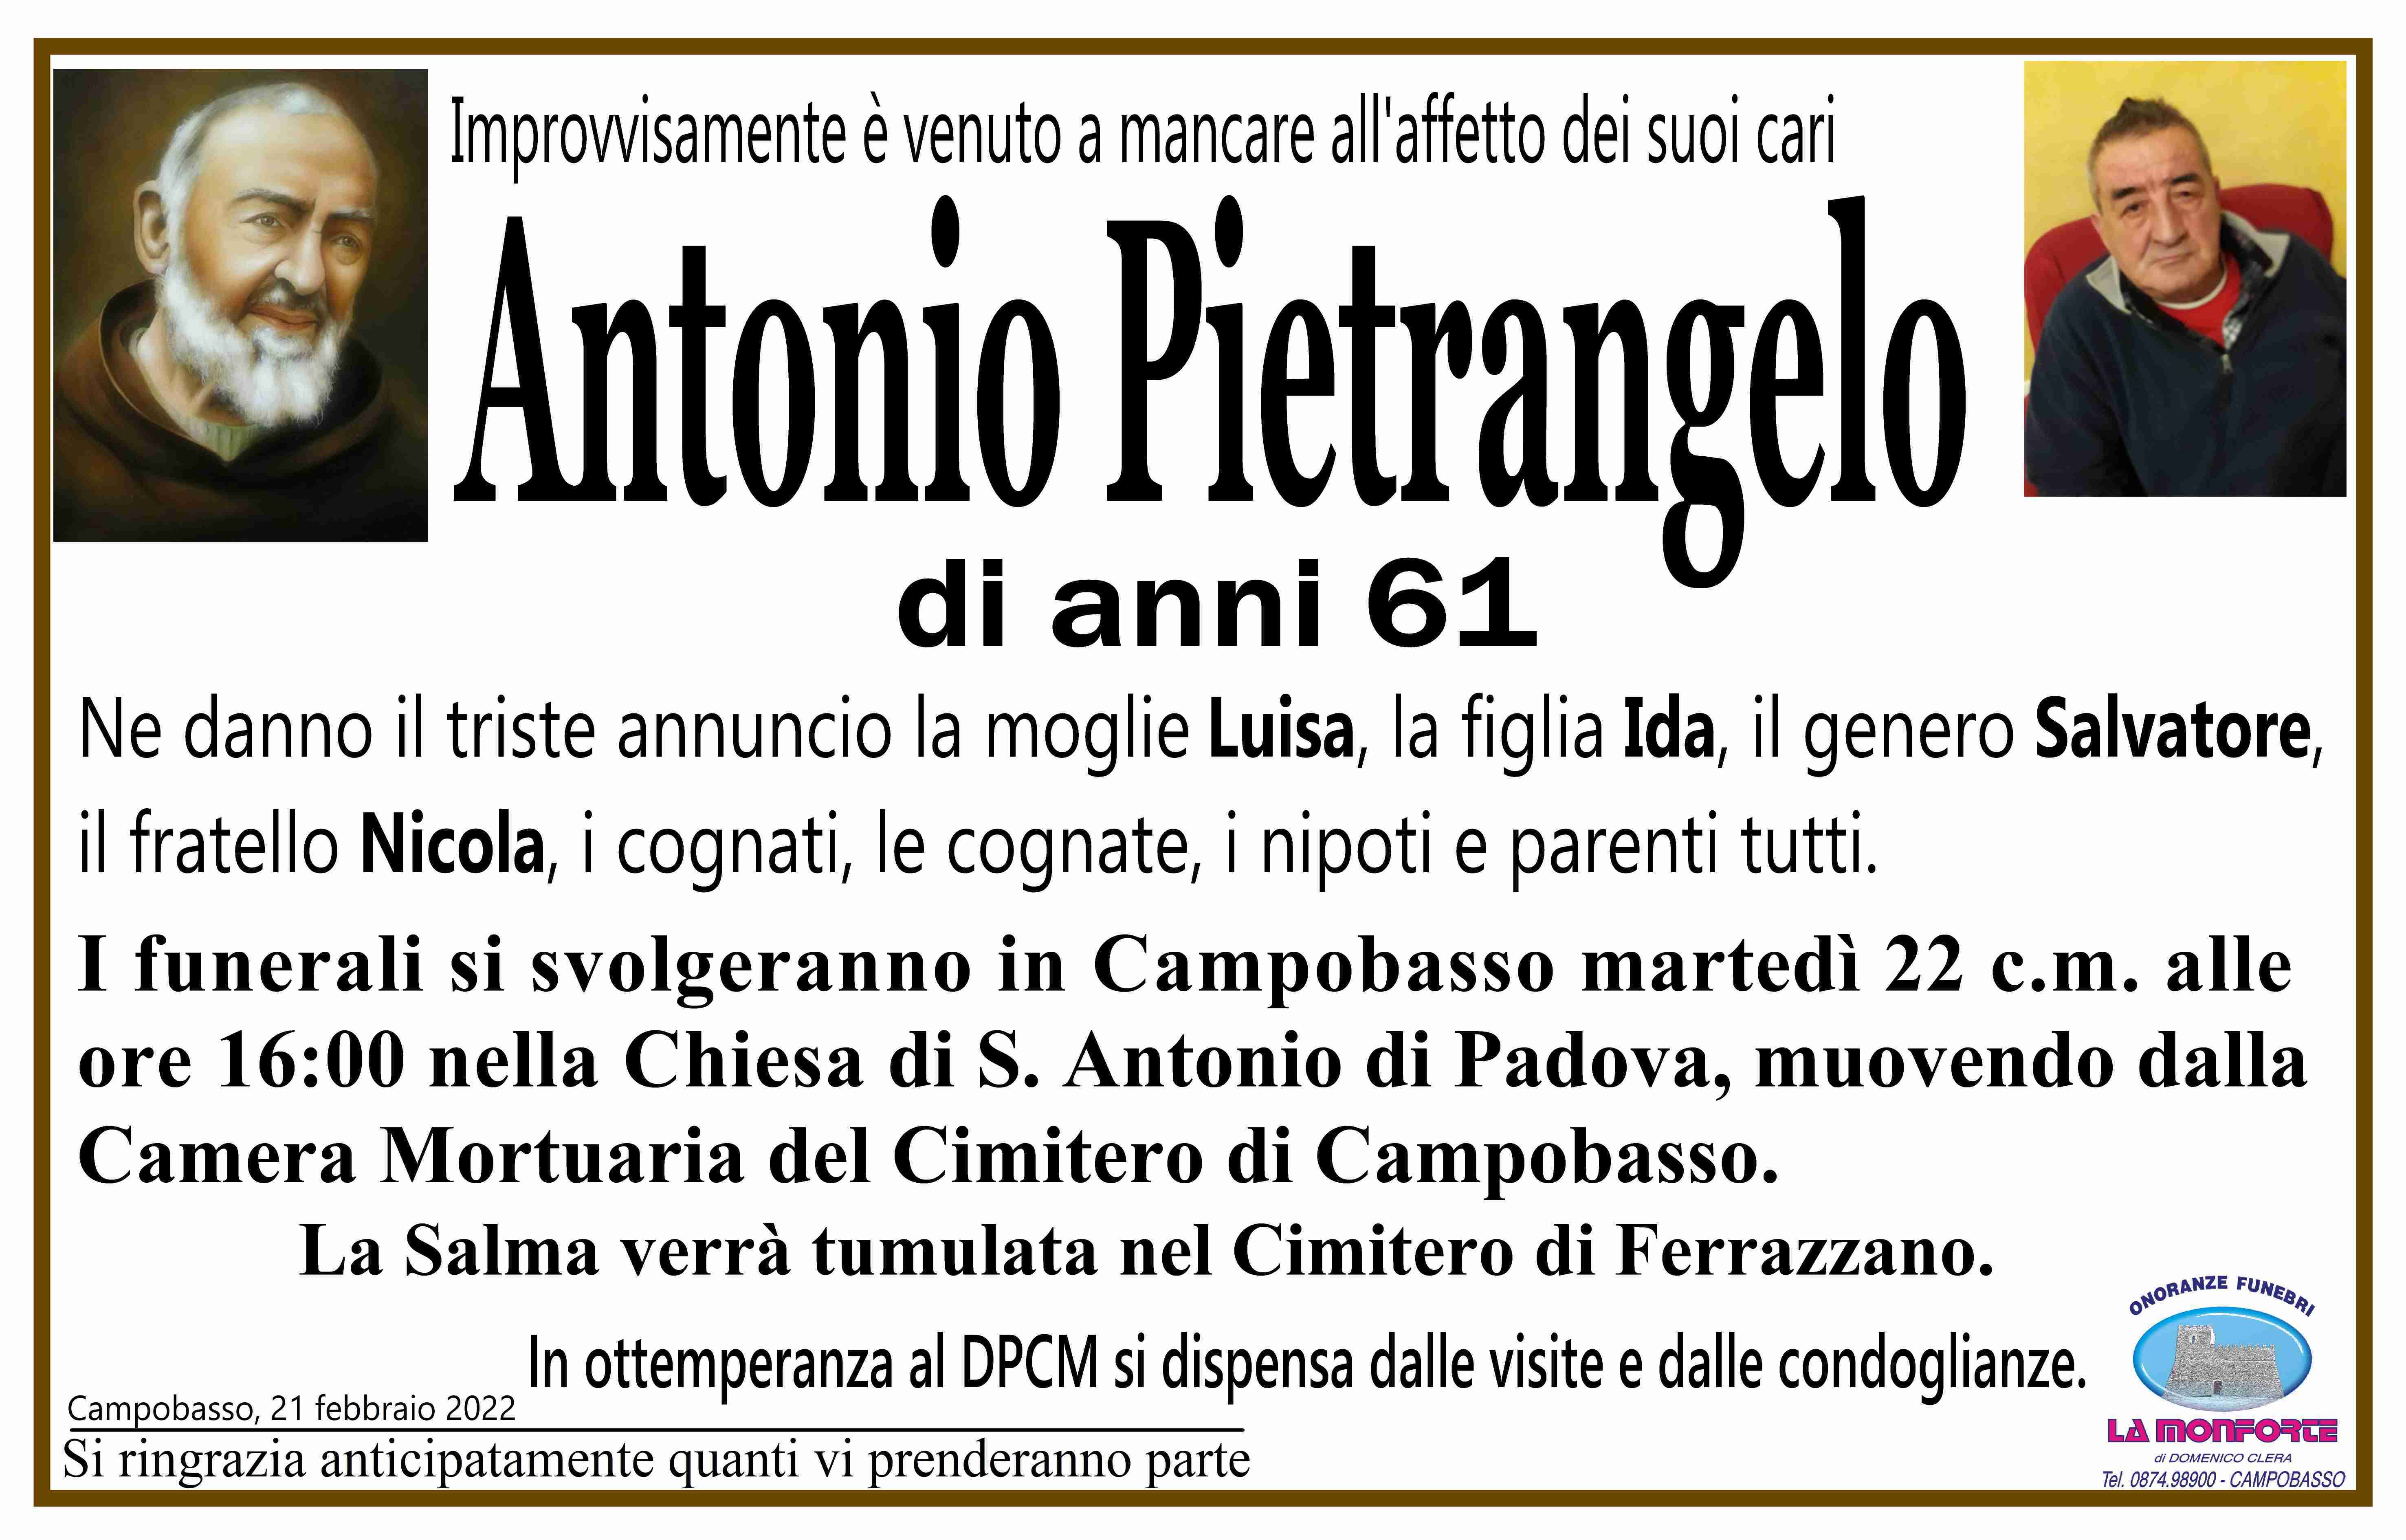 Antonio Pietrangelo